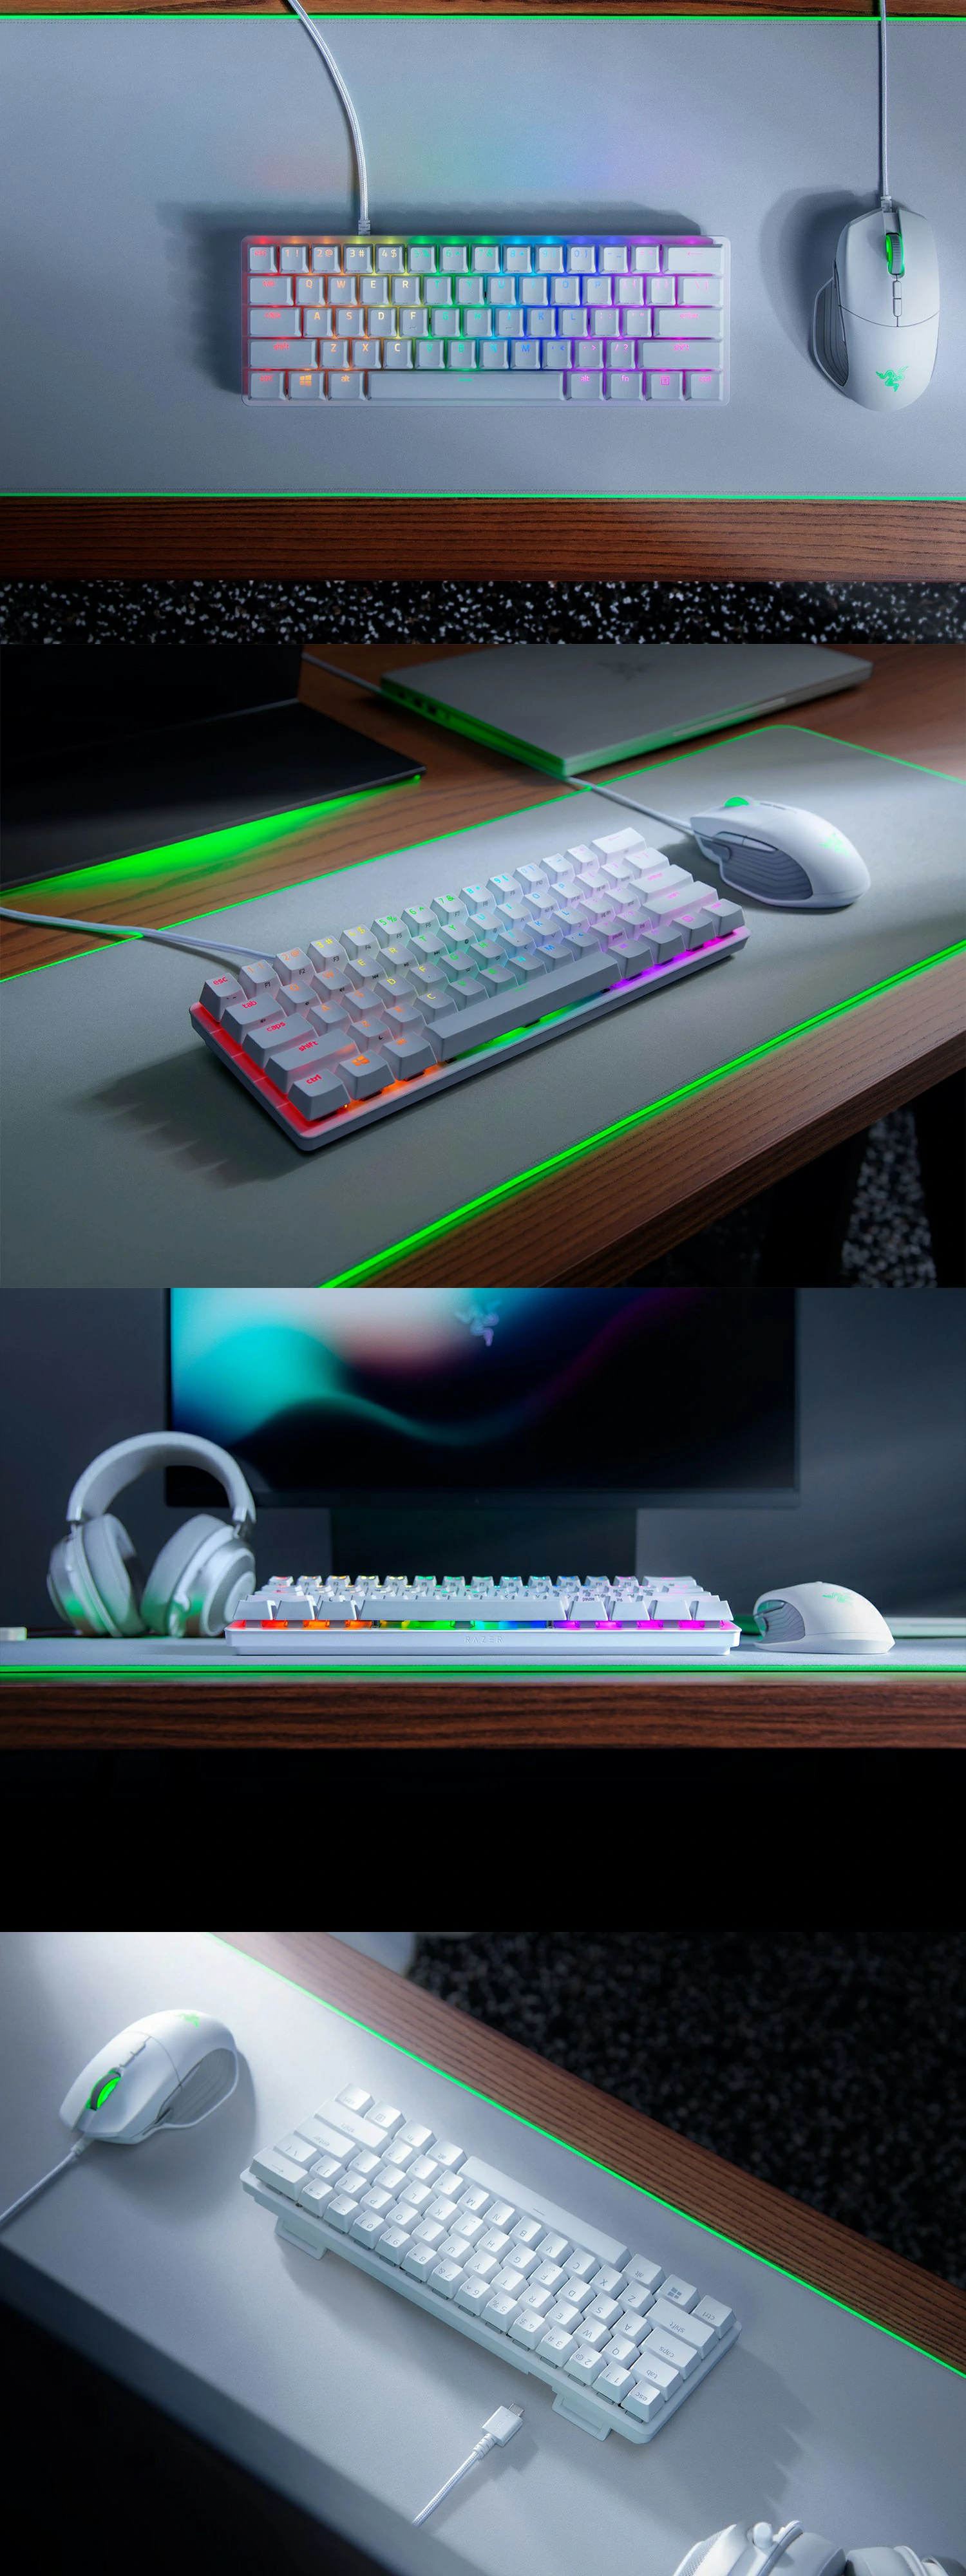 Overview - Razer Huntsman Mini 60% Gaming Keyboard with Razer Optical Switch - White